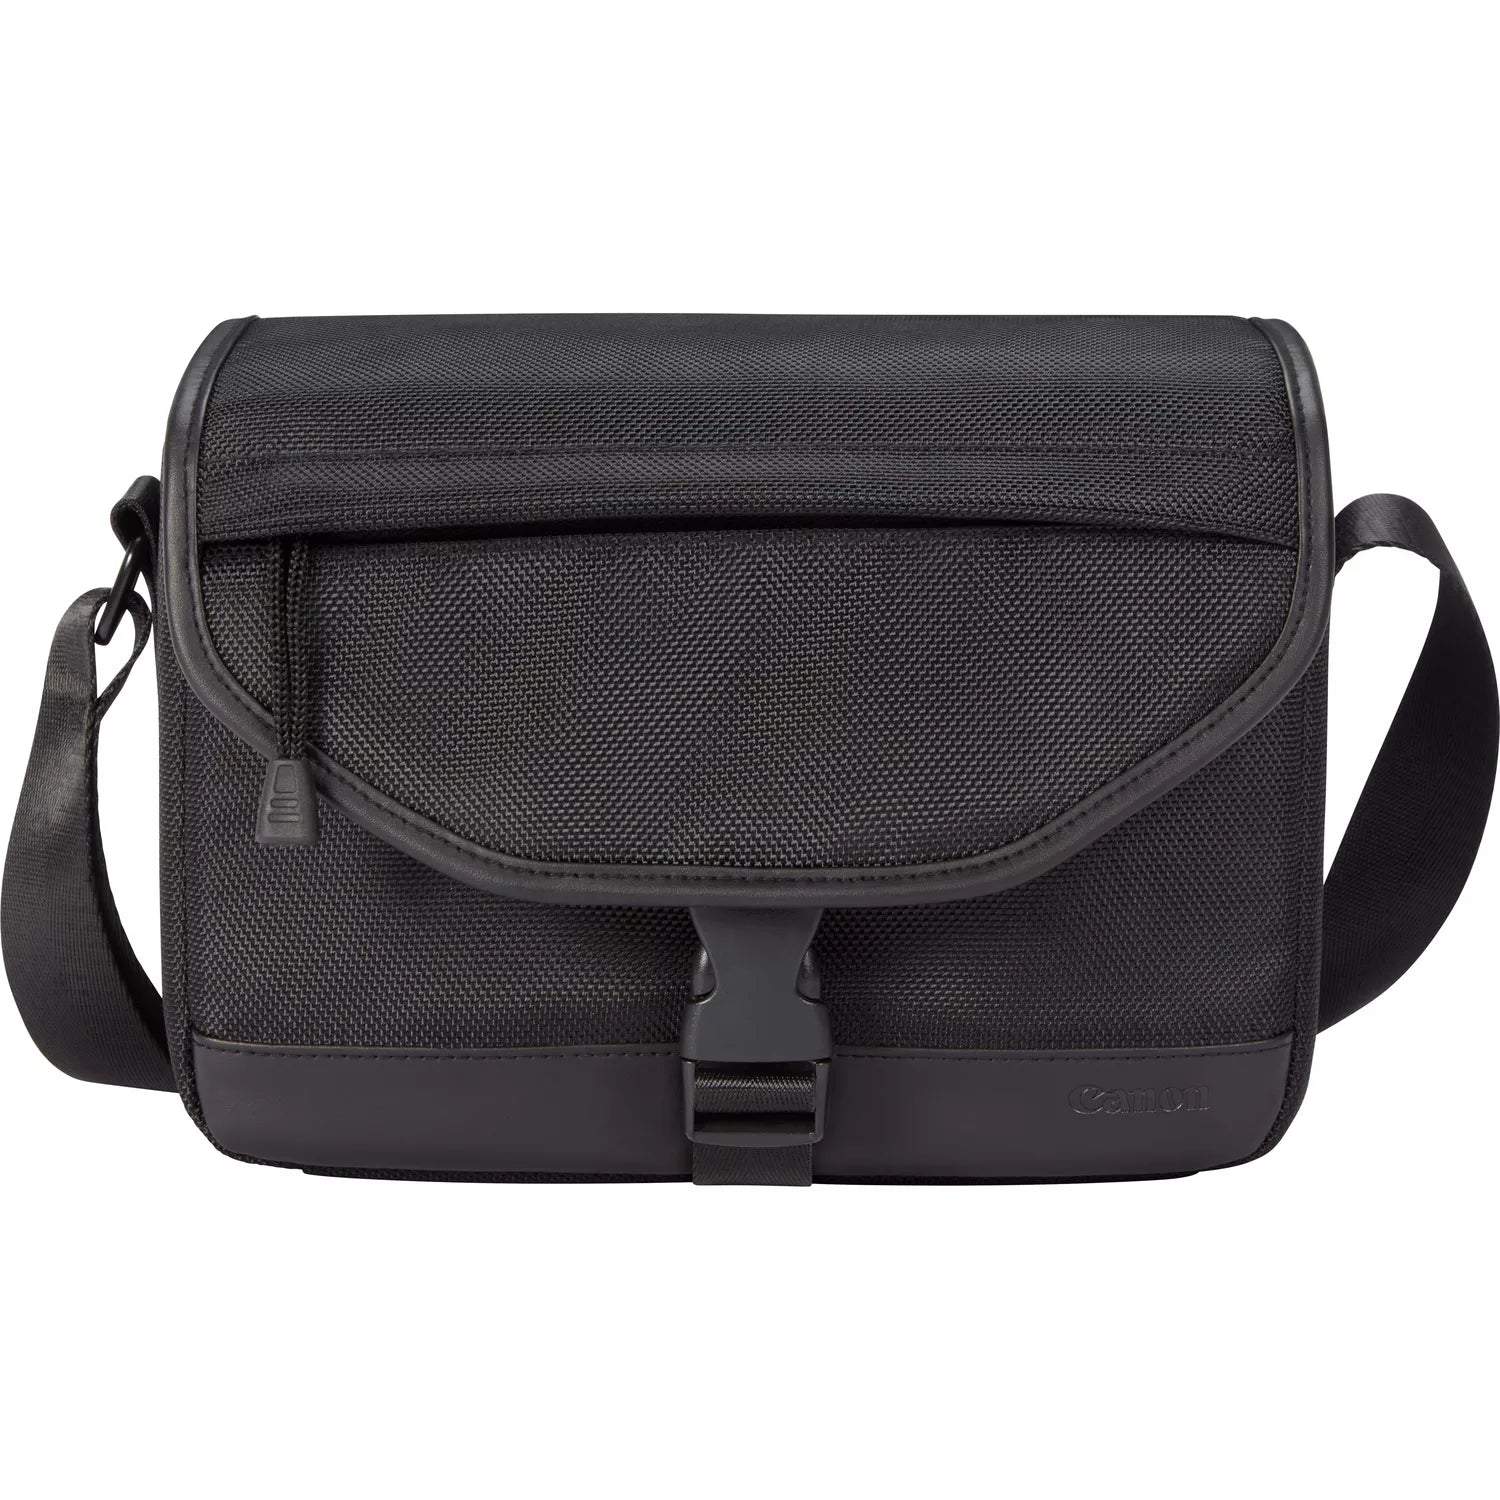 Product Image of Canon Shoulder bag For DSLR & Mirrorless Cameras - Black